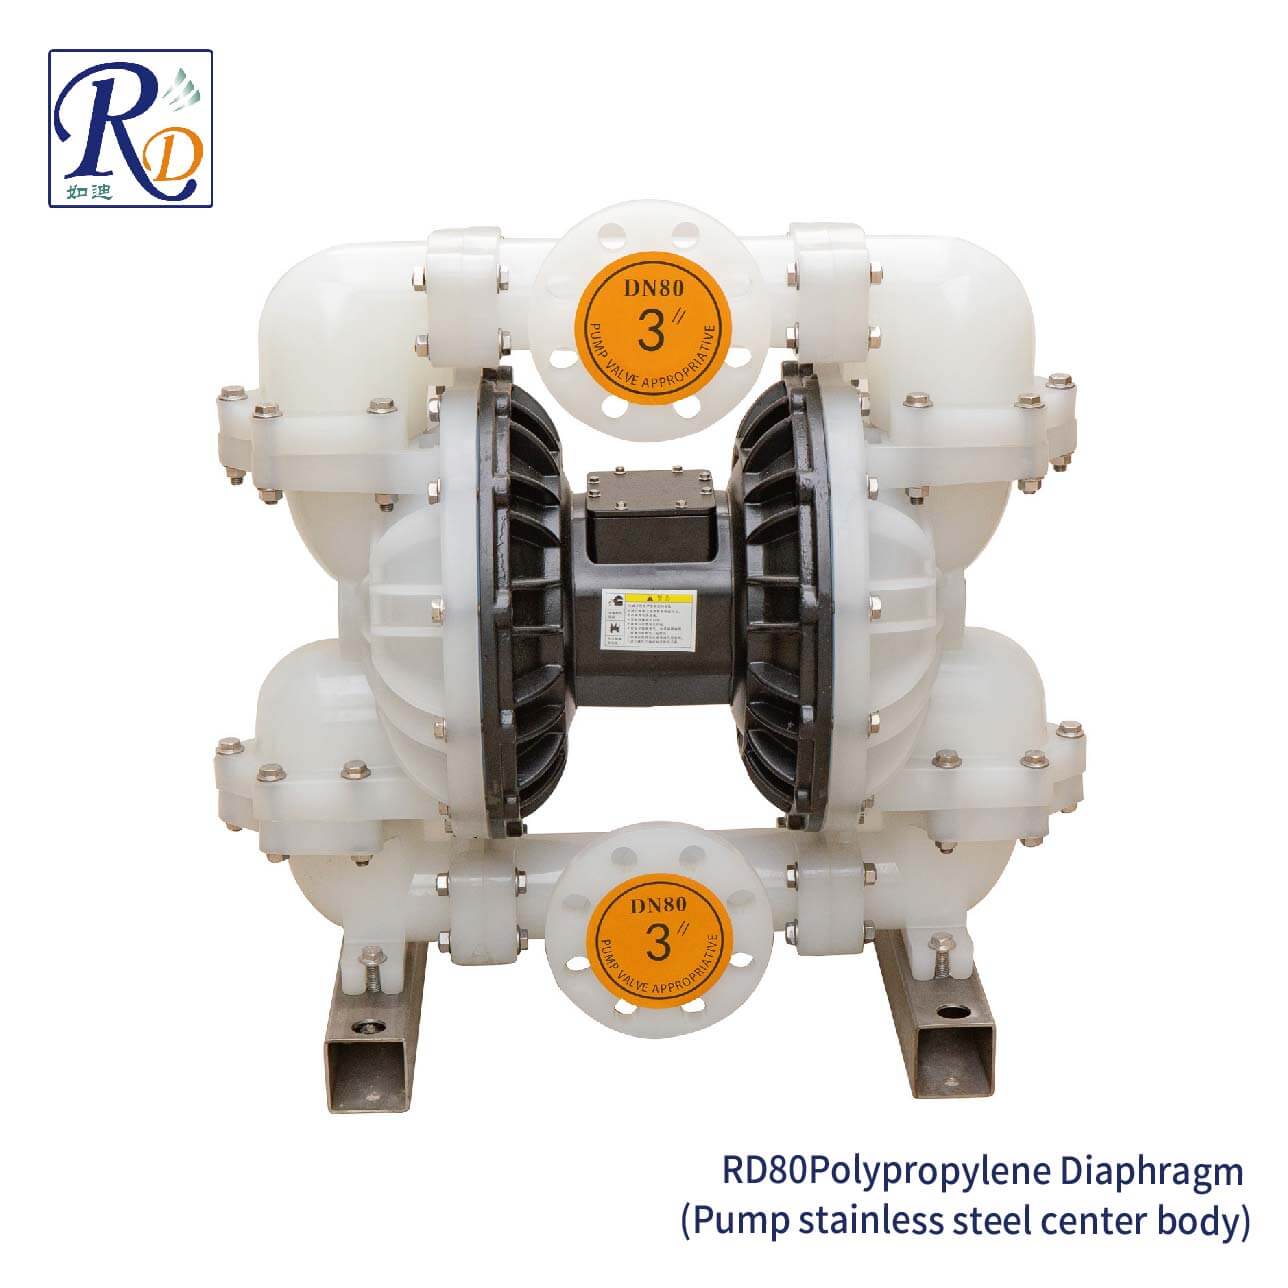 RD80 Polypropylene Diaphragm Pump